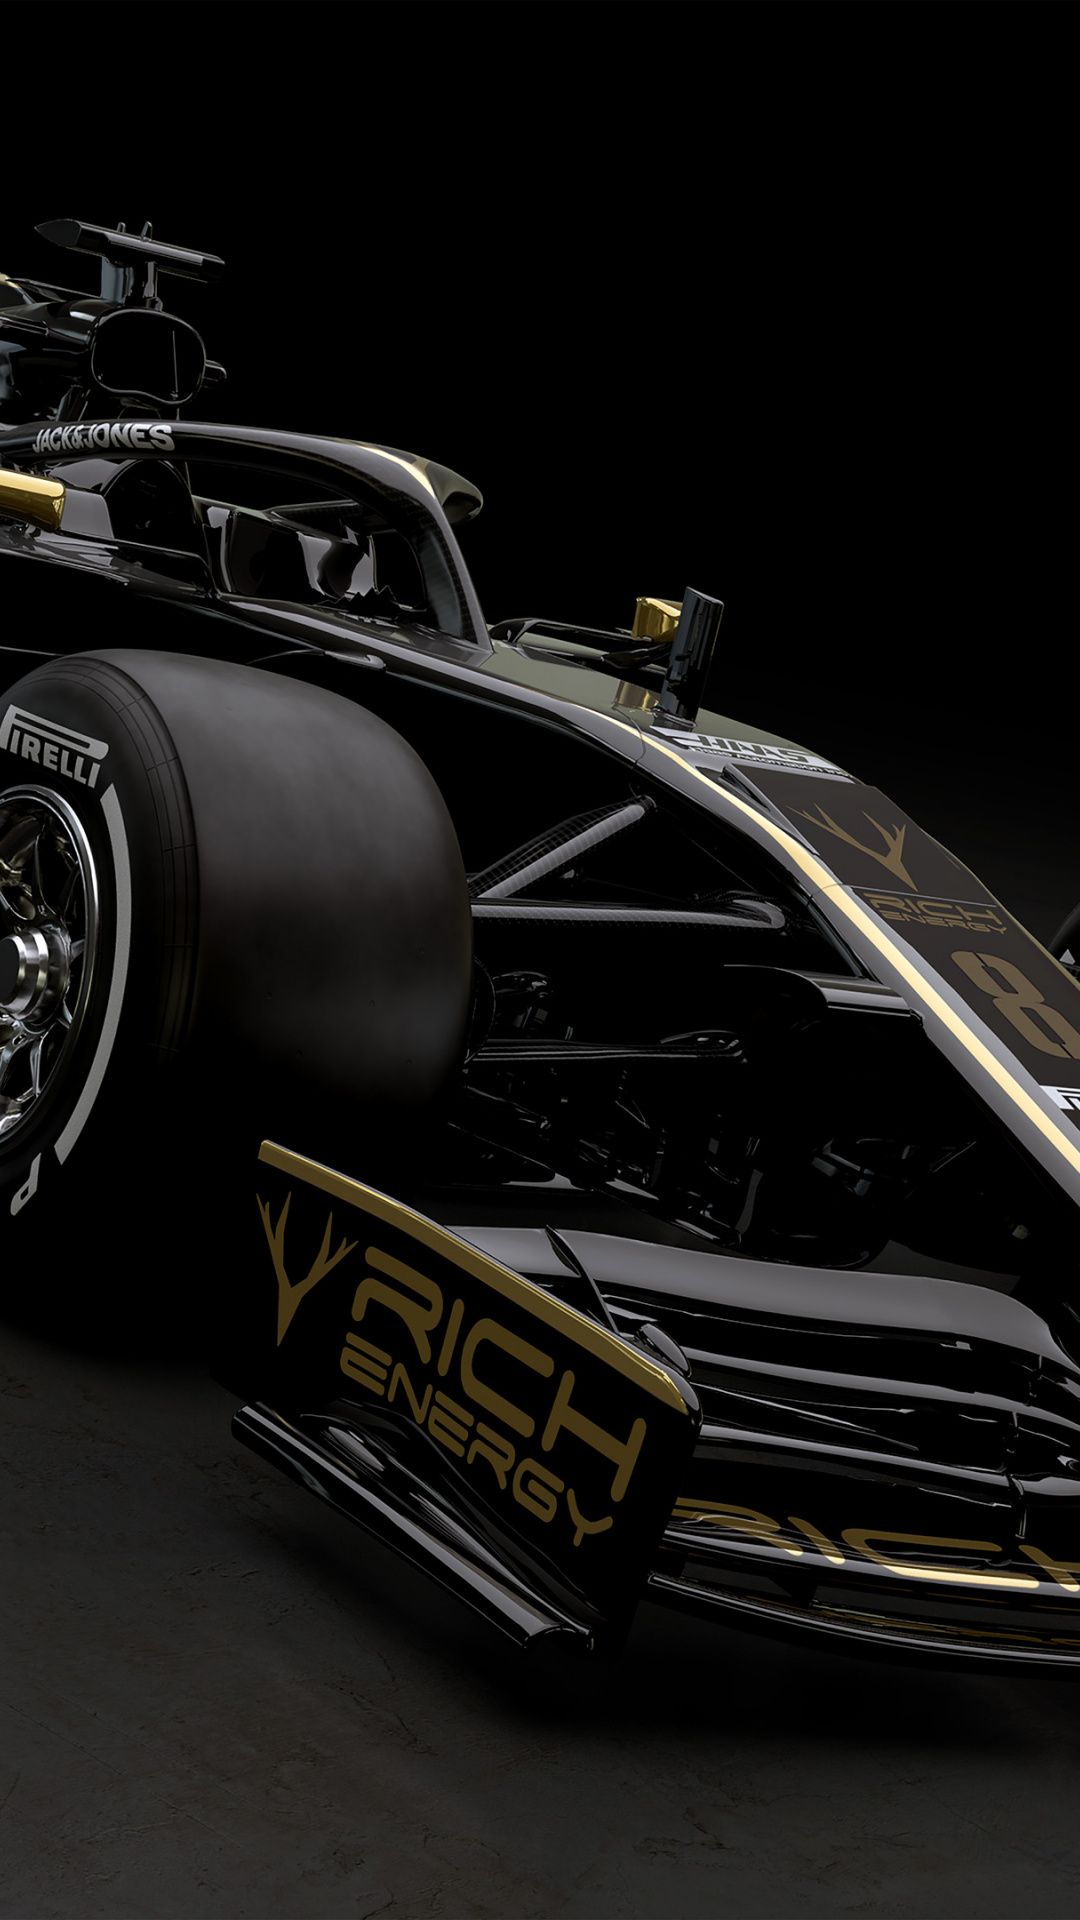 Haas Vf F1 Sports Car Wallpaper Cars Vehicles